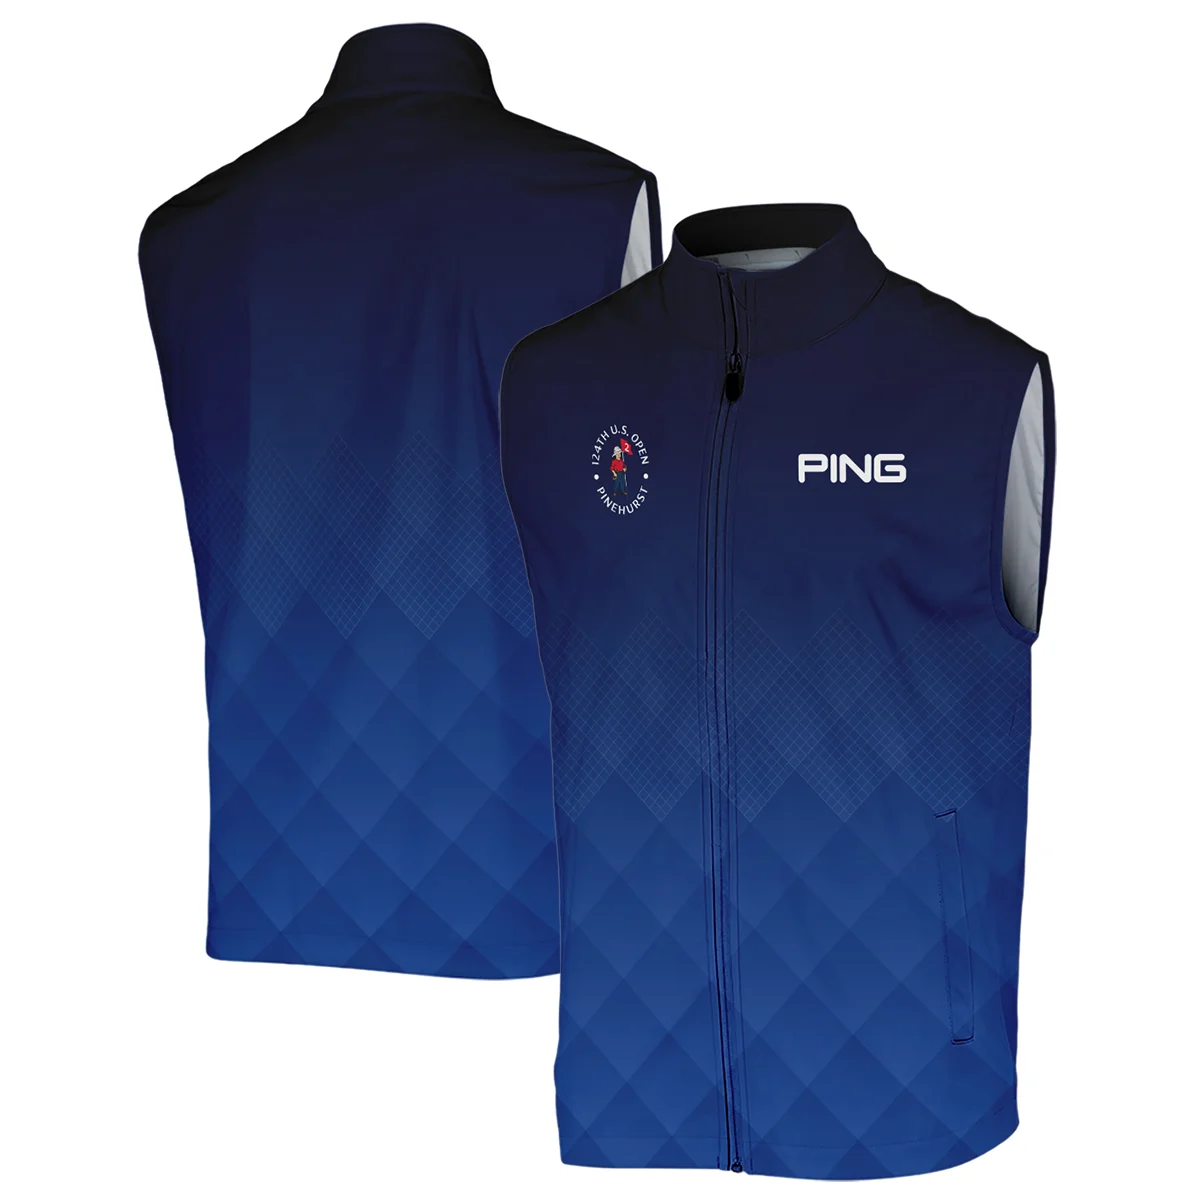 124th U.S. Open Pinehurst Ping Dark Blue Gradient Stripes Pattern Style Classic Quarter Zipped Sweatshirt